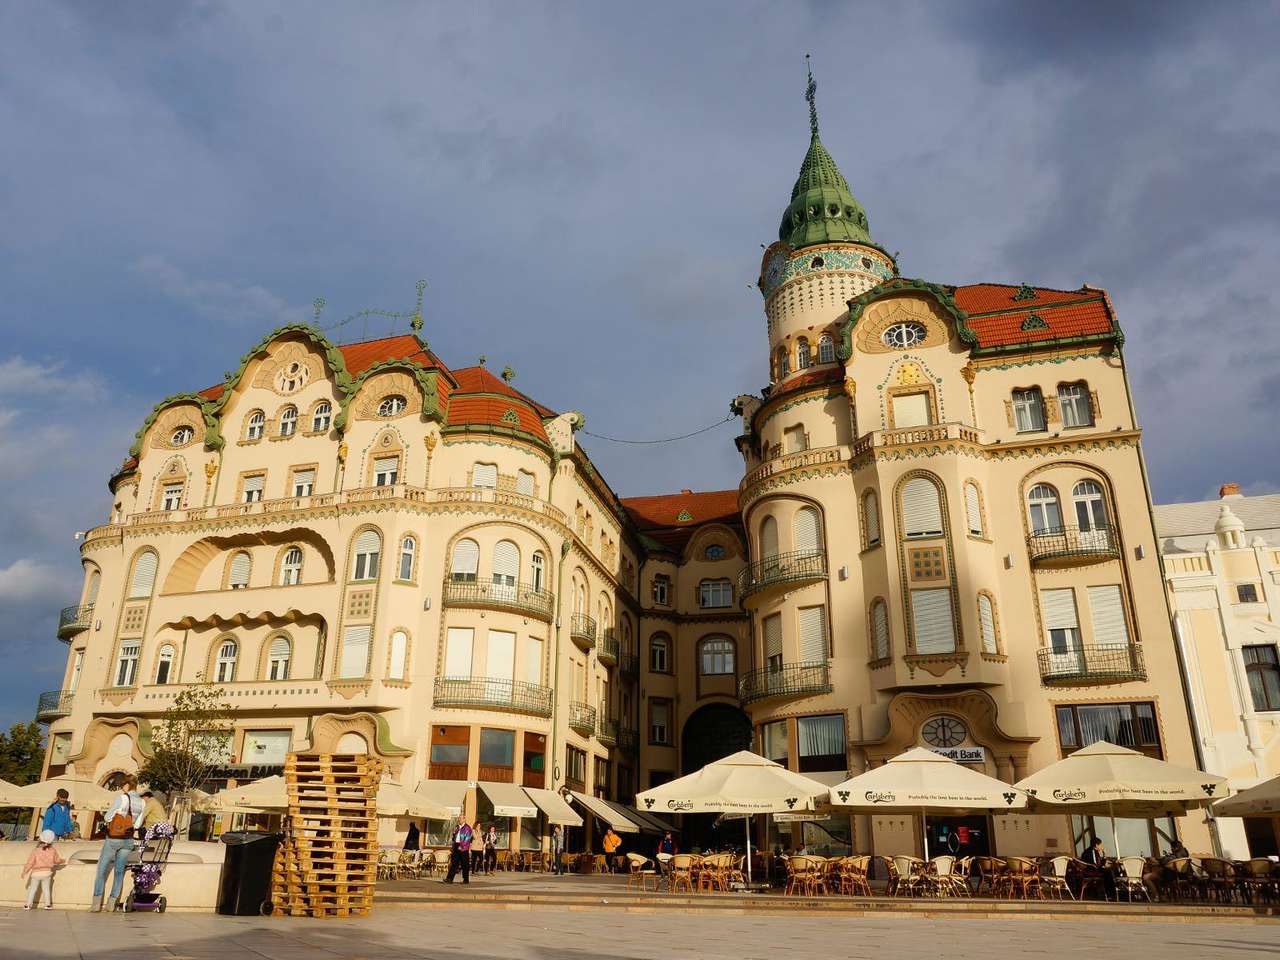 Oradea stad in Roemenië online puzzel